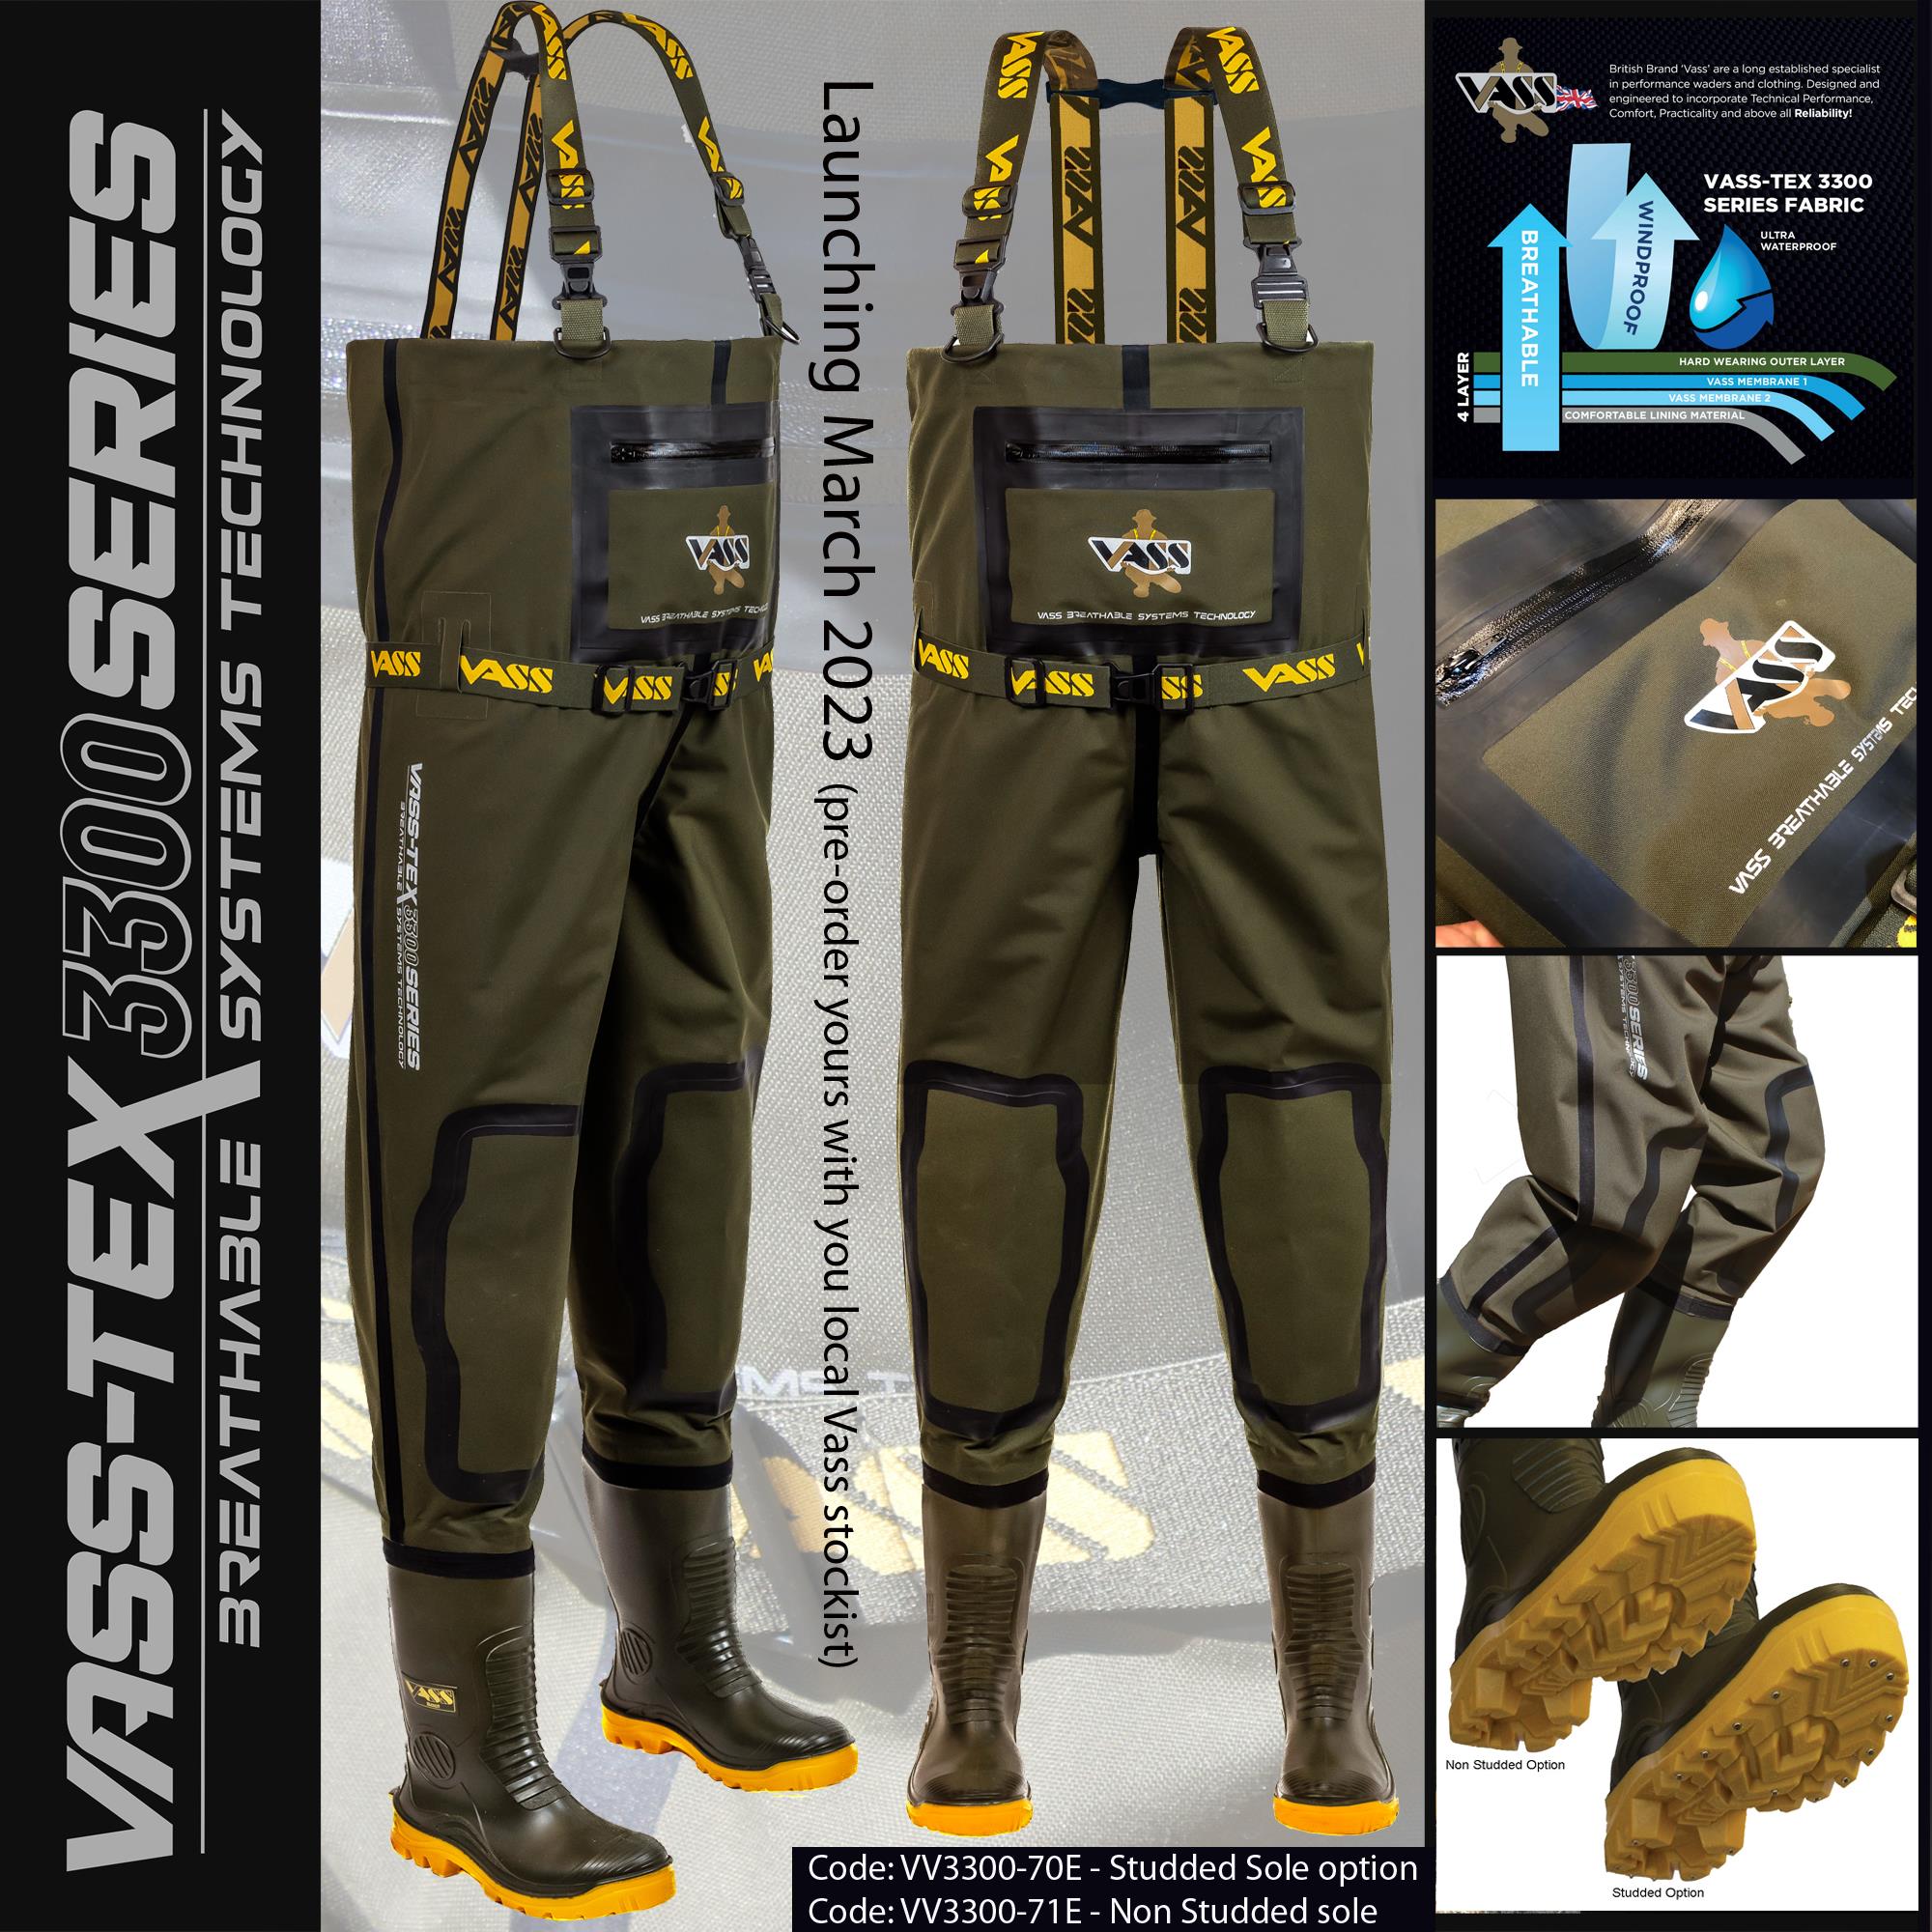 Vass Wader Repair Kit > Outdoor Gear / Shelters